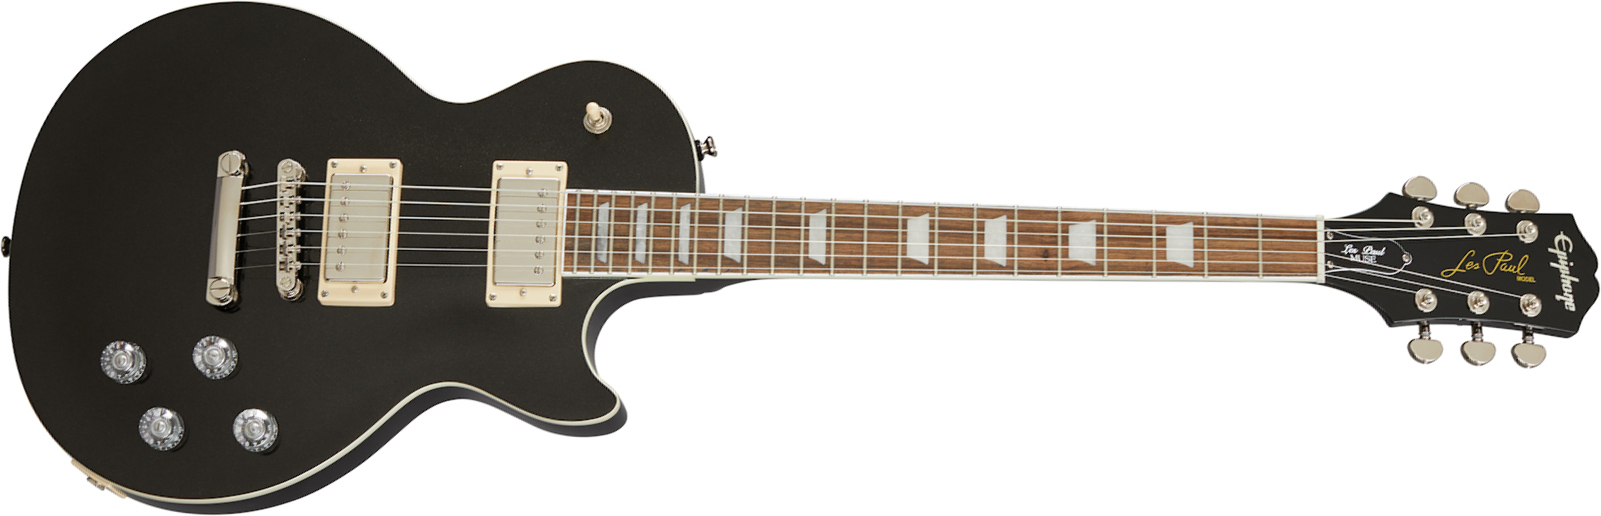 Epiphone Les Paul Muse Modern 2h Ht Lau - Jet Black Metallic - Single cut electric guitar - Main picture